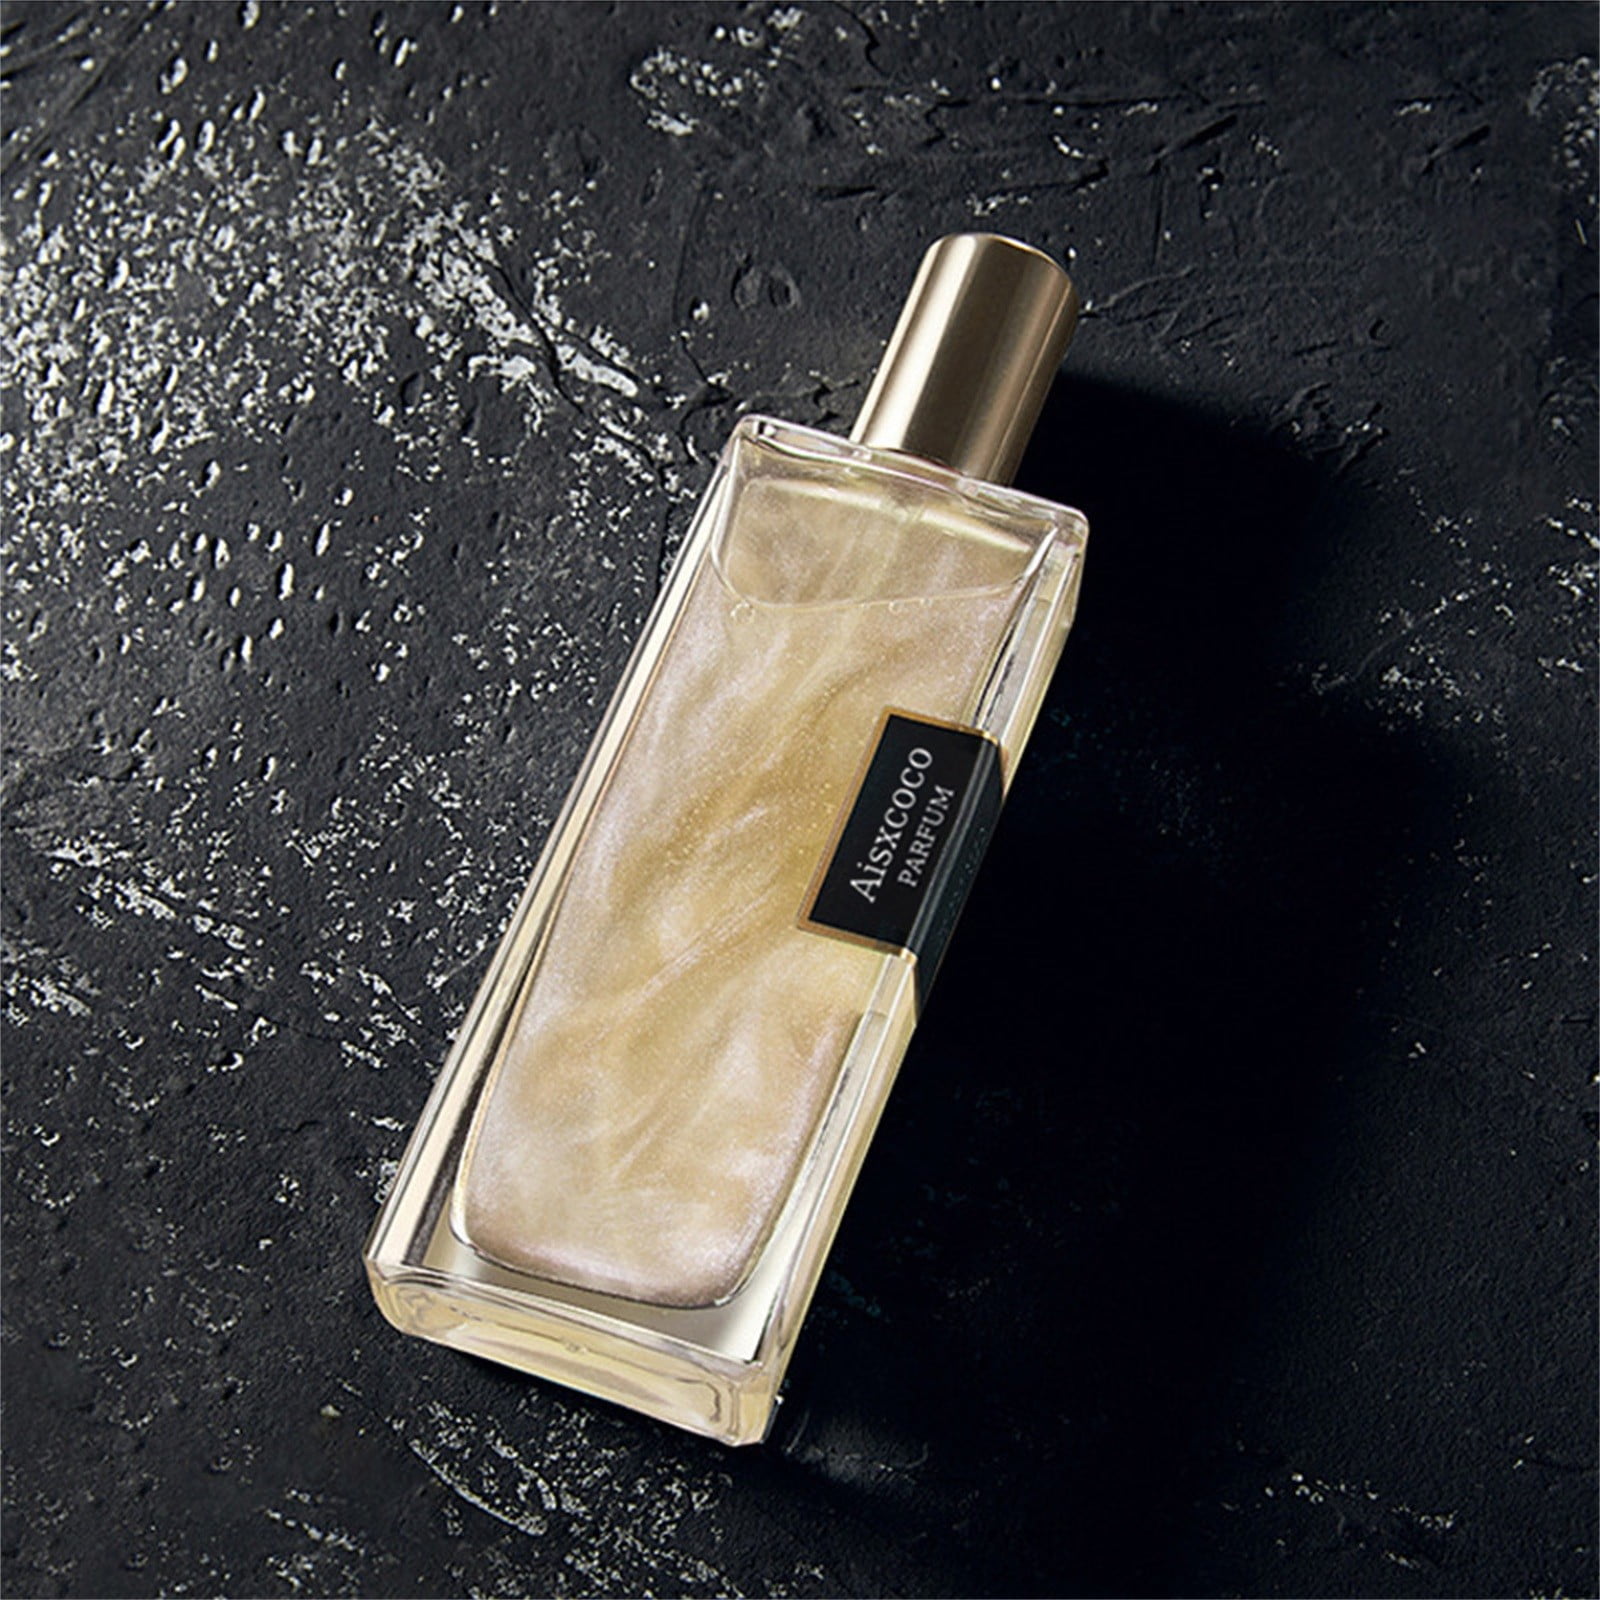 keusn women's fragrances sand perfume women's fresh and lasting eau de  toilette spray perfume for woman spray 